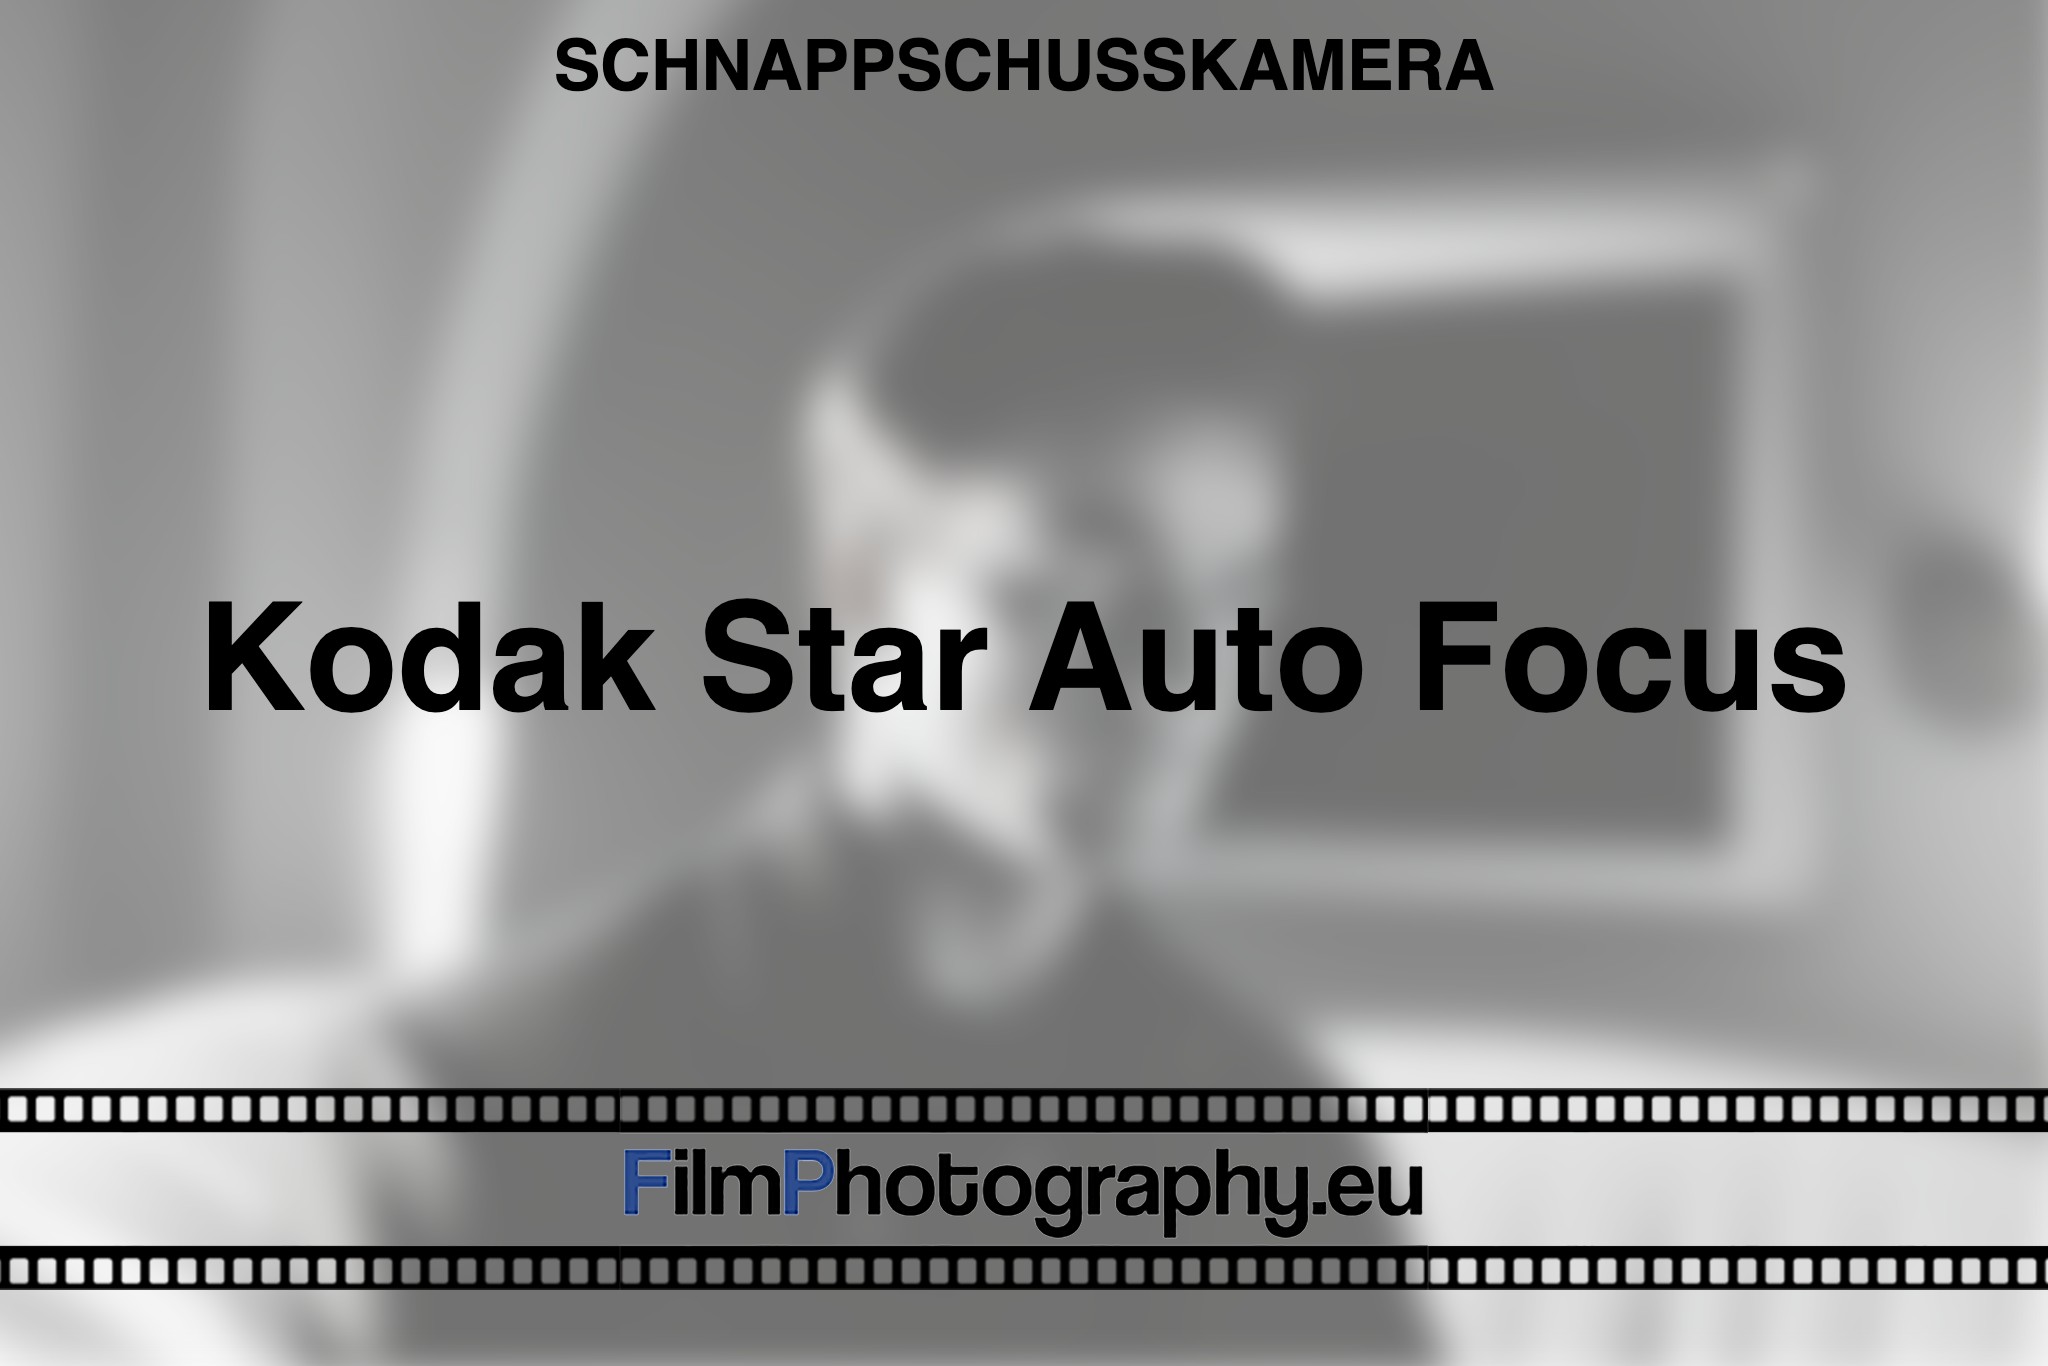 kodak-star-auto-focus-schnappschusskamera-bnv